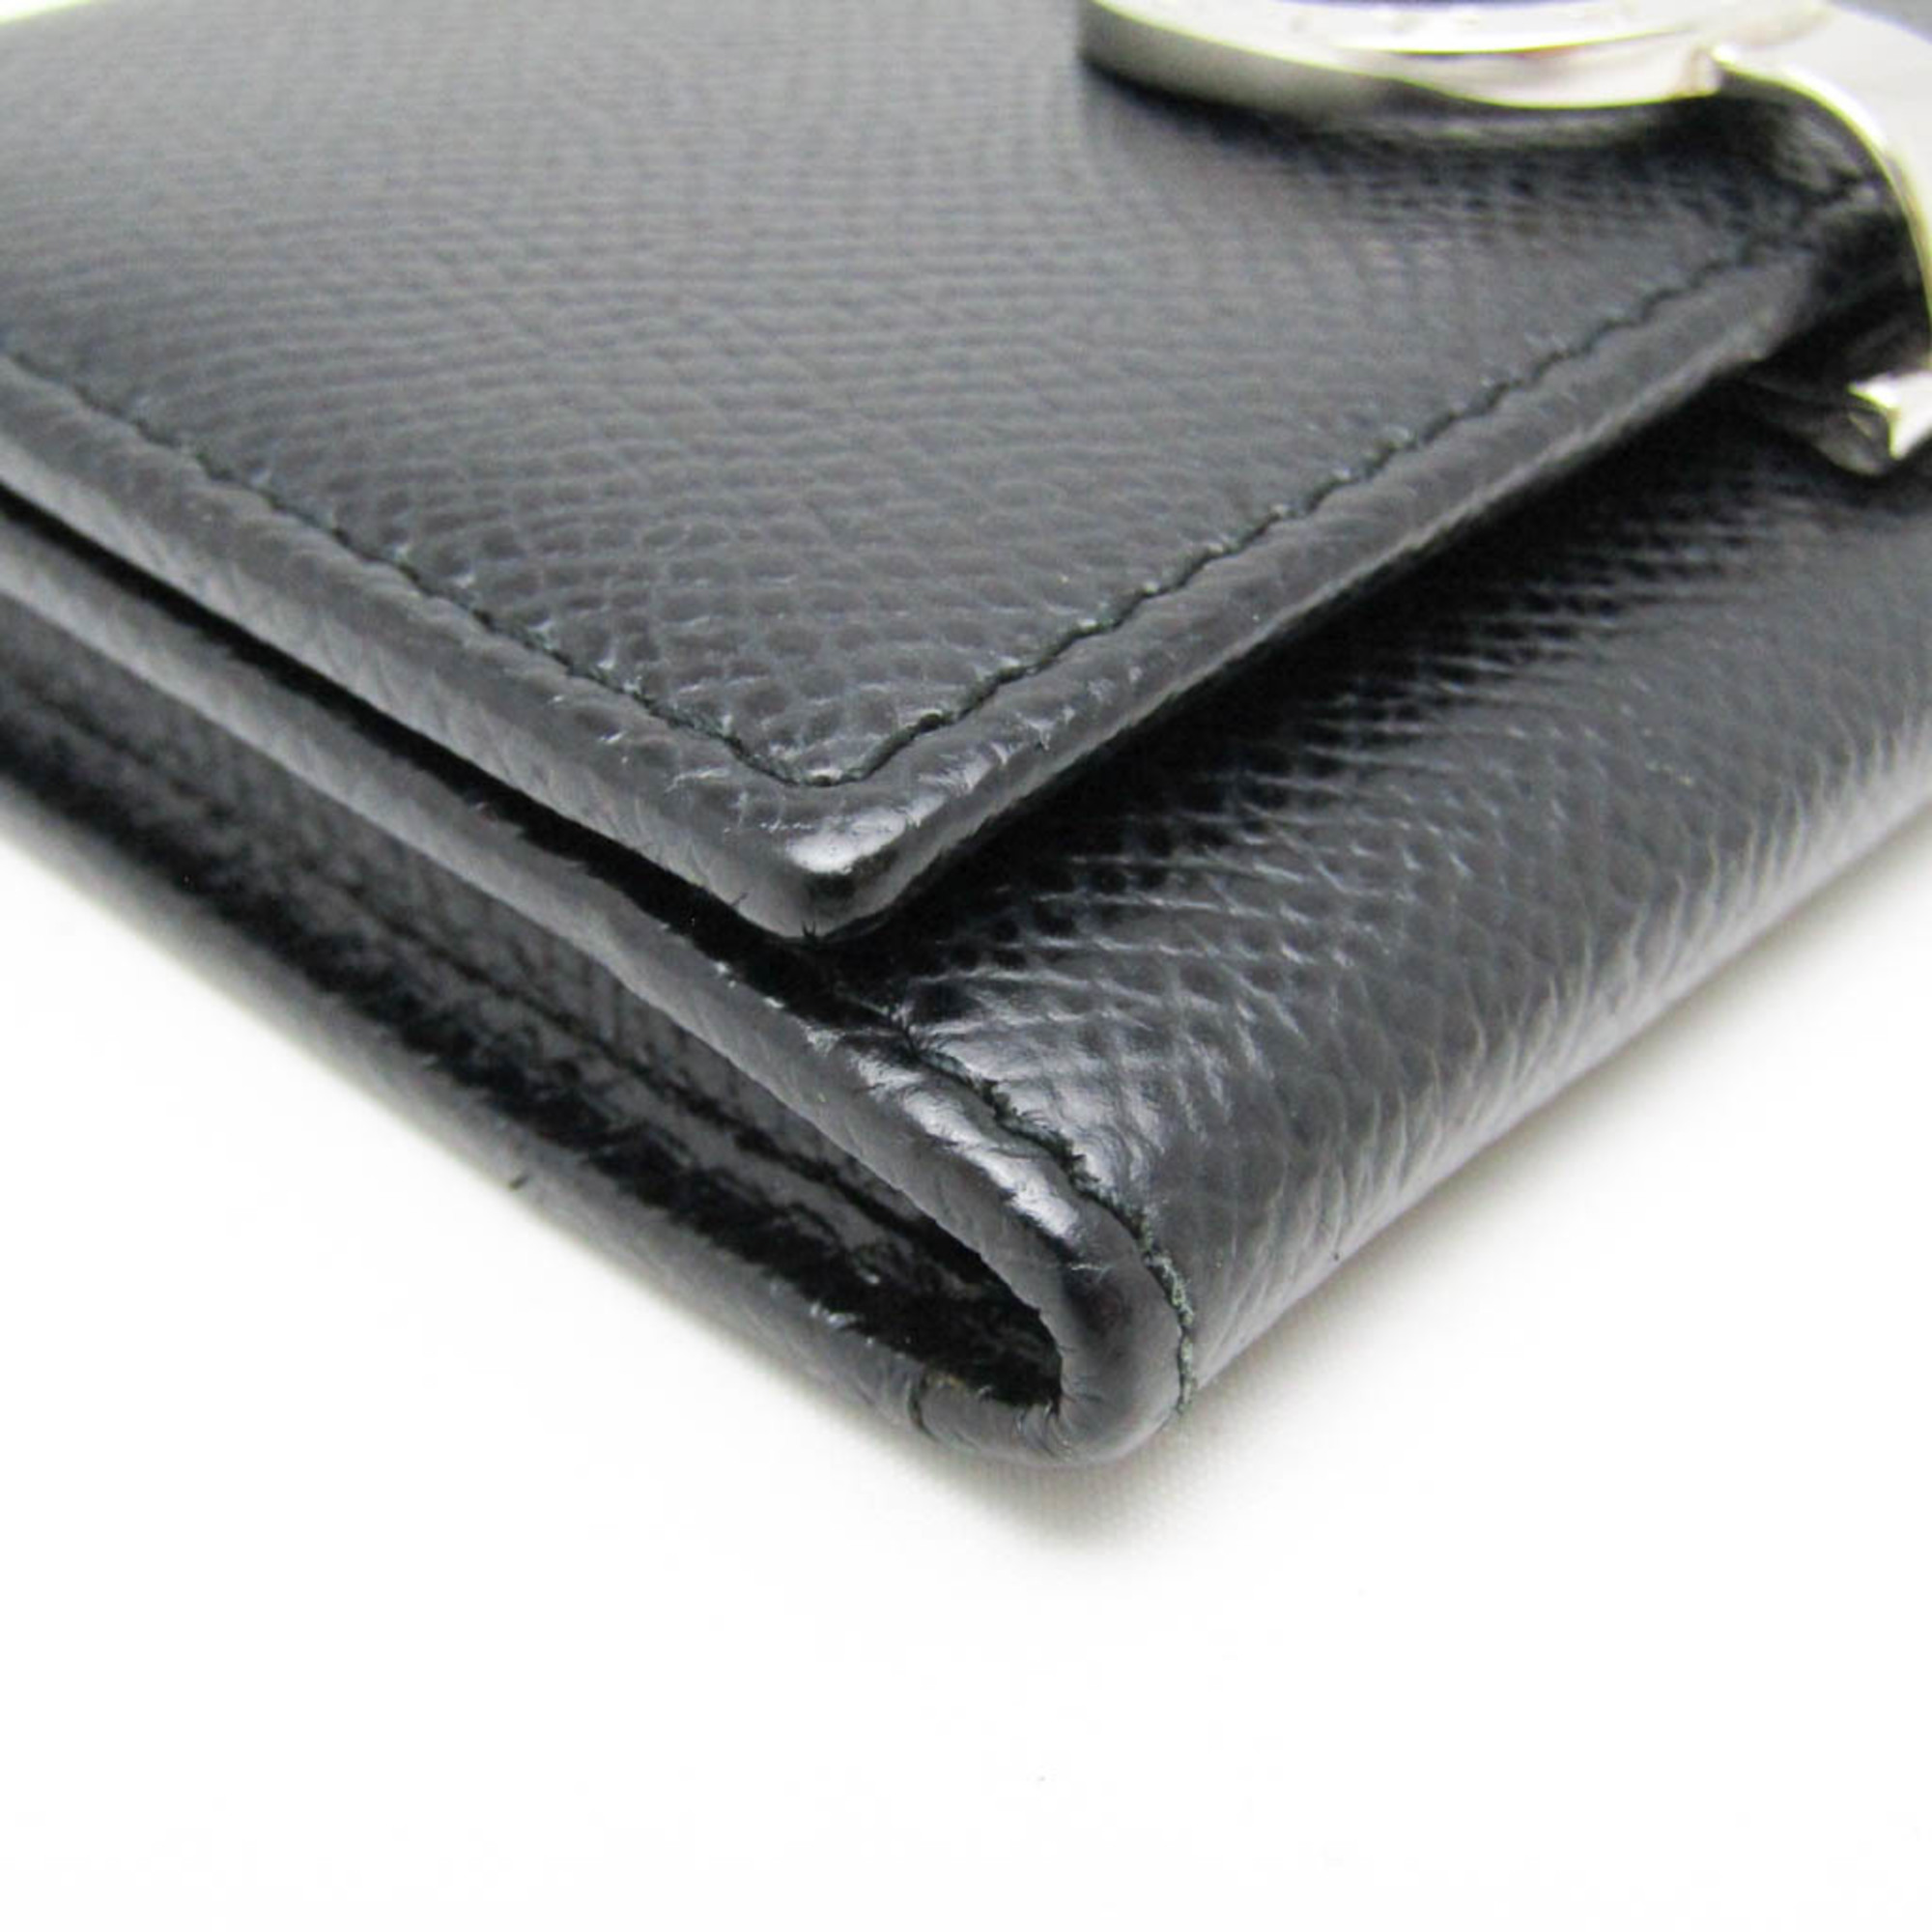 Bvlgari Bvlgari Bvlgari 30420 Leather Card Case Black